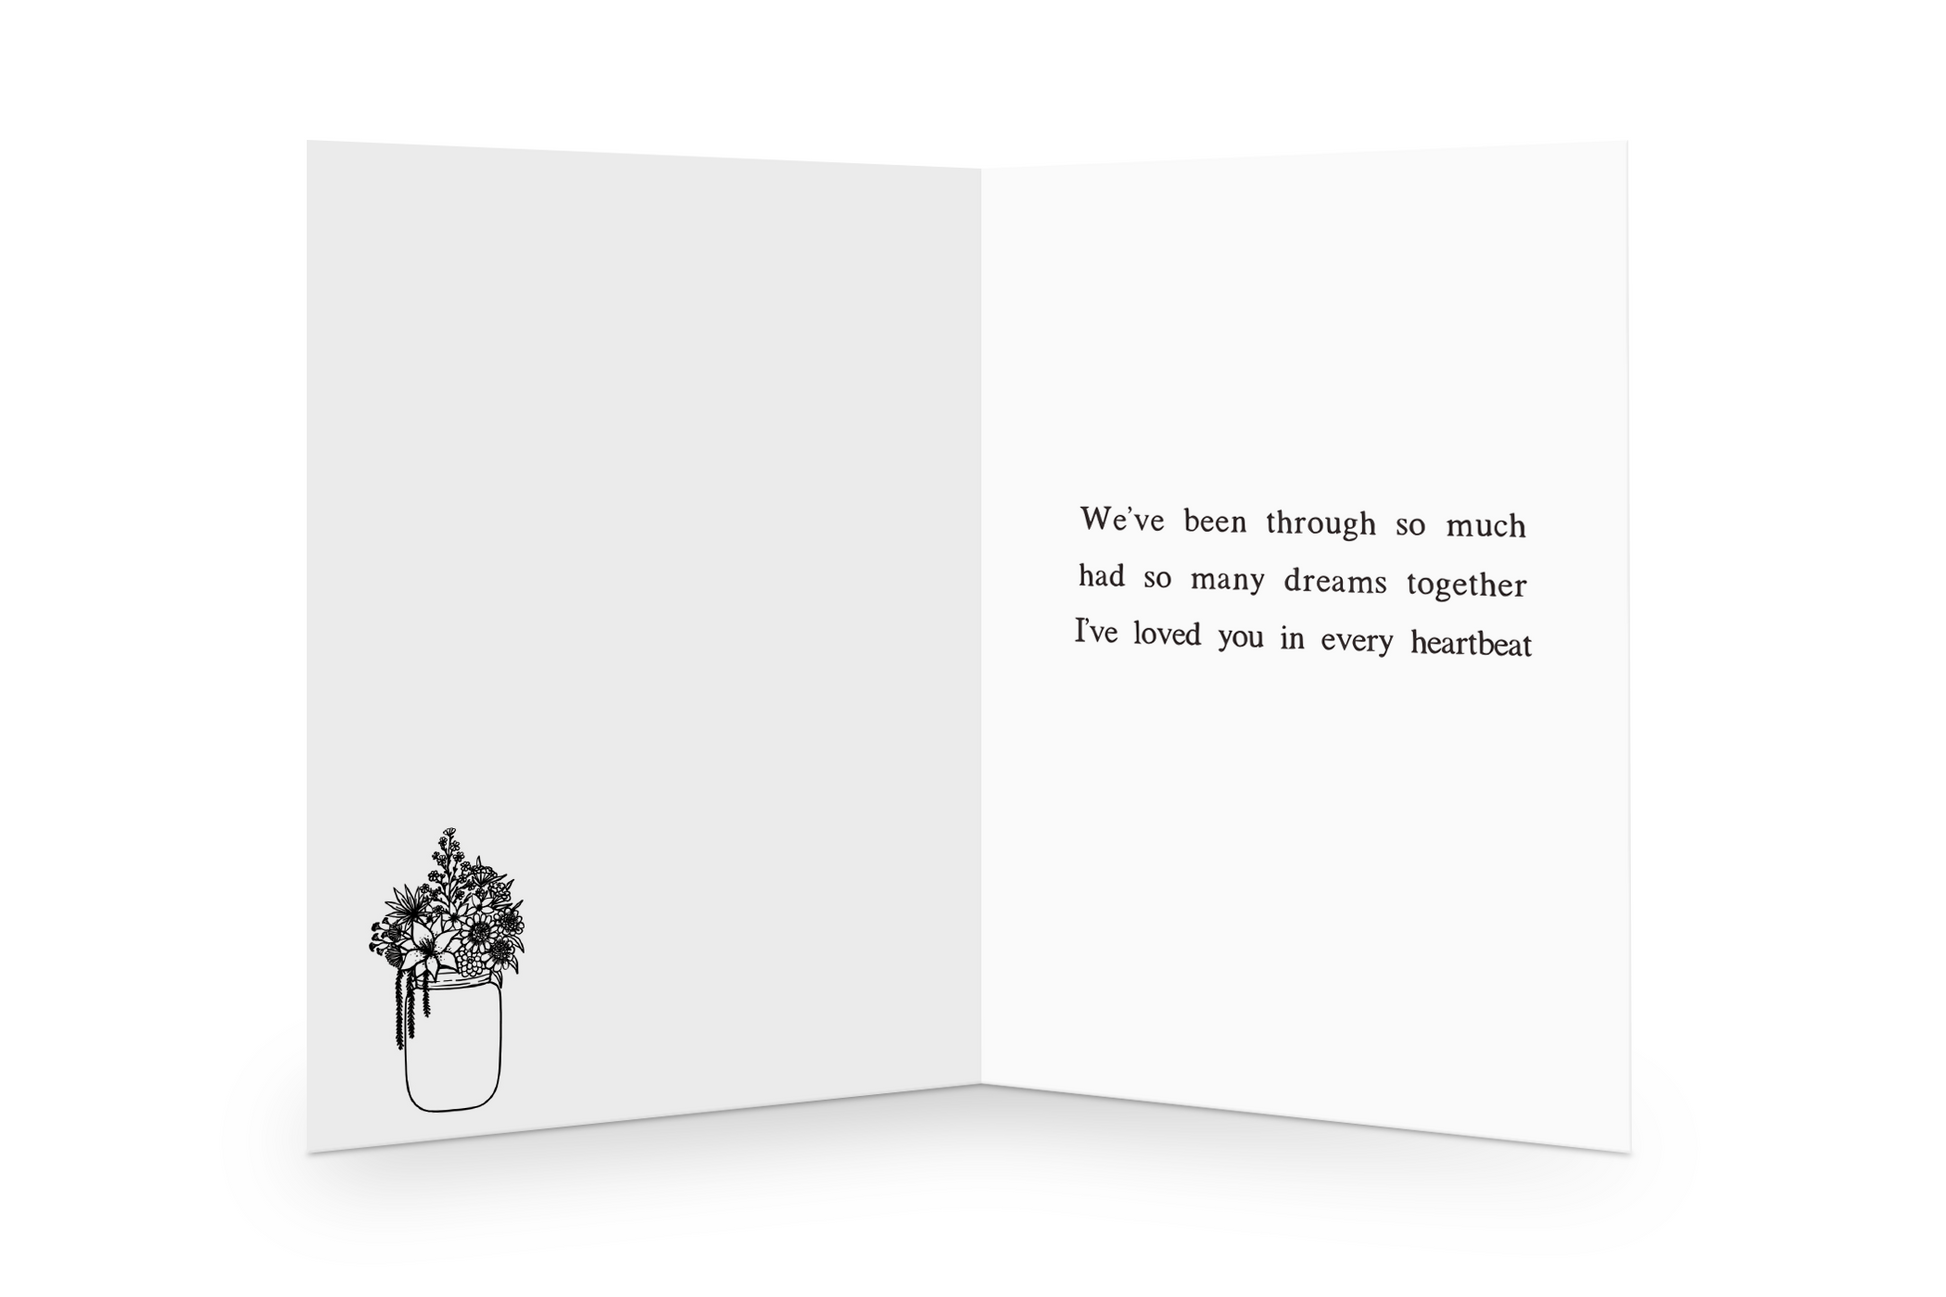 Love poem inside greeting card